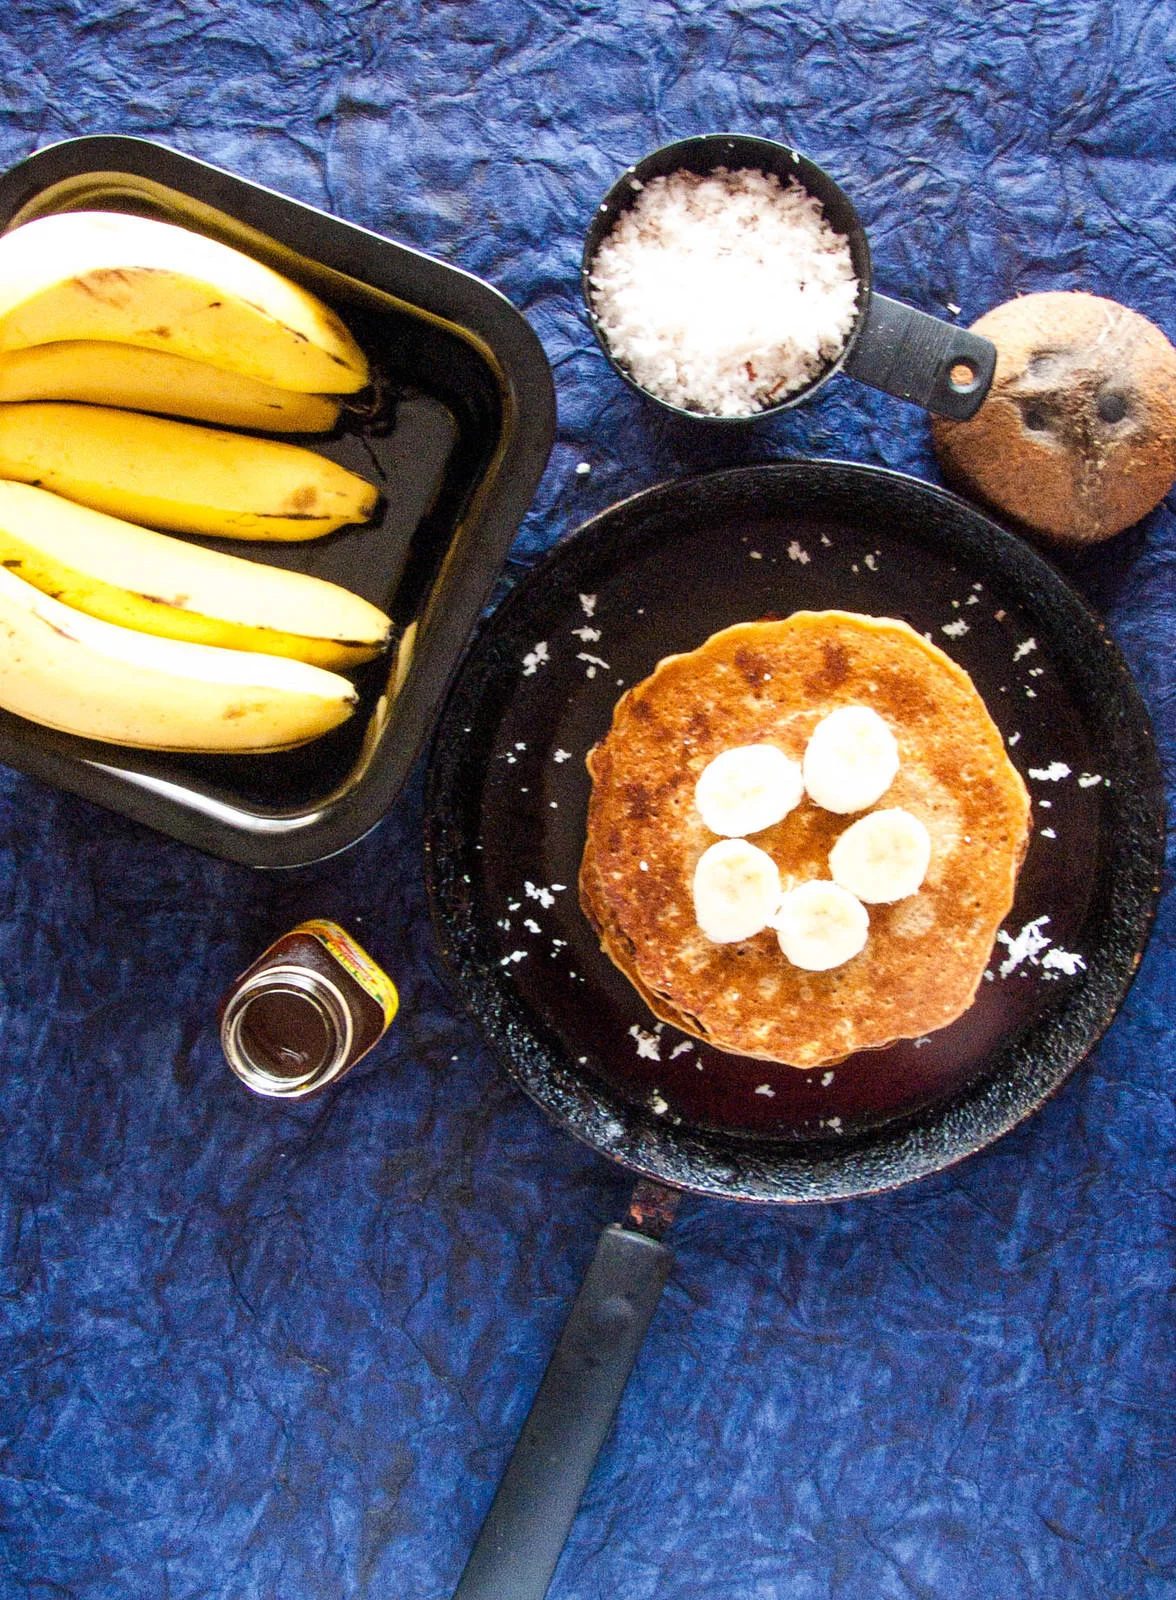 122: How to Make Eggless Banana Pancake Recipe without Baking Soda